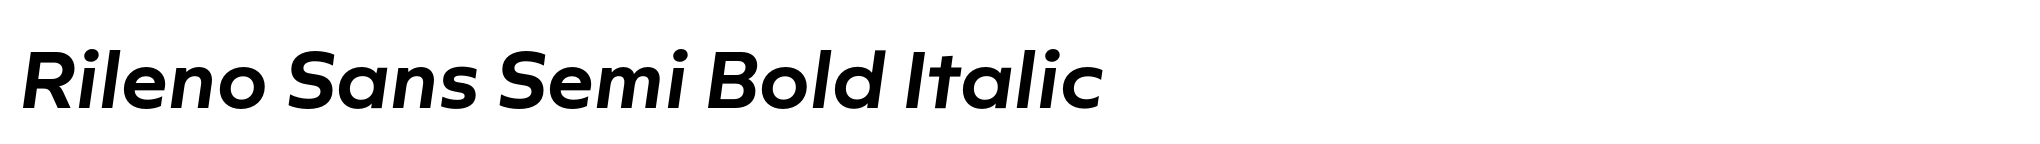 Rileno Sans Semi Bold Italic image